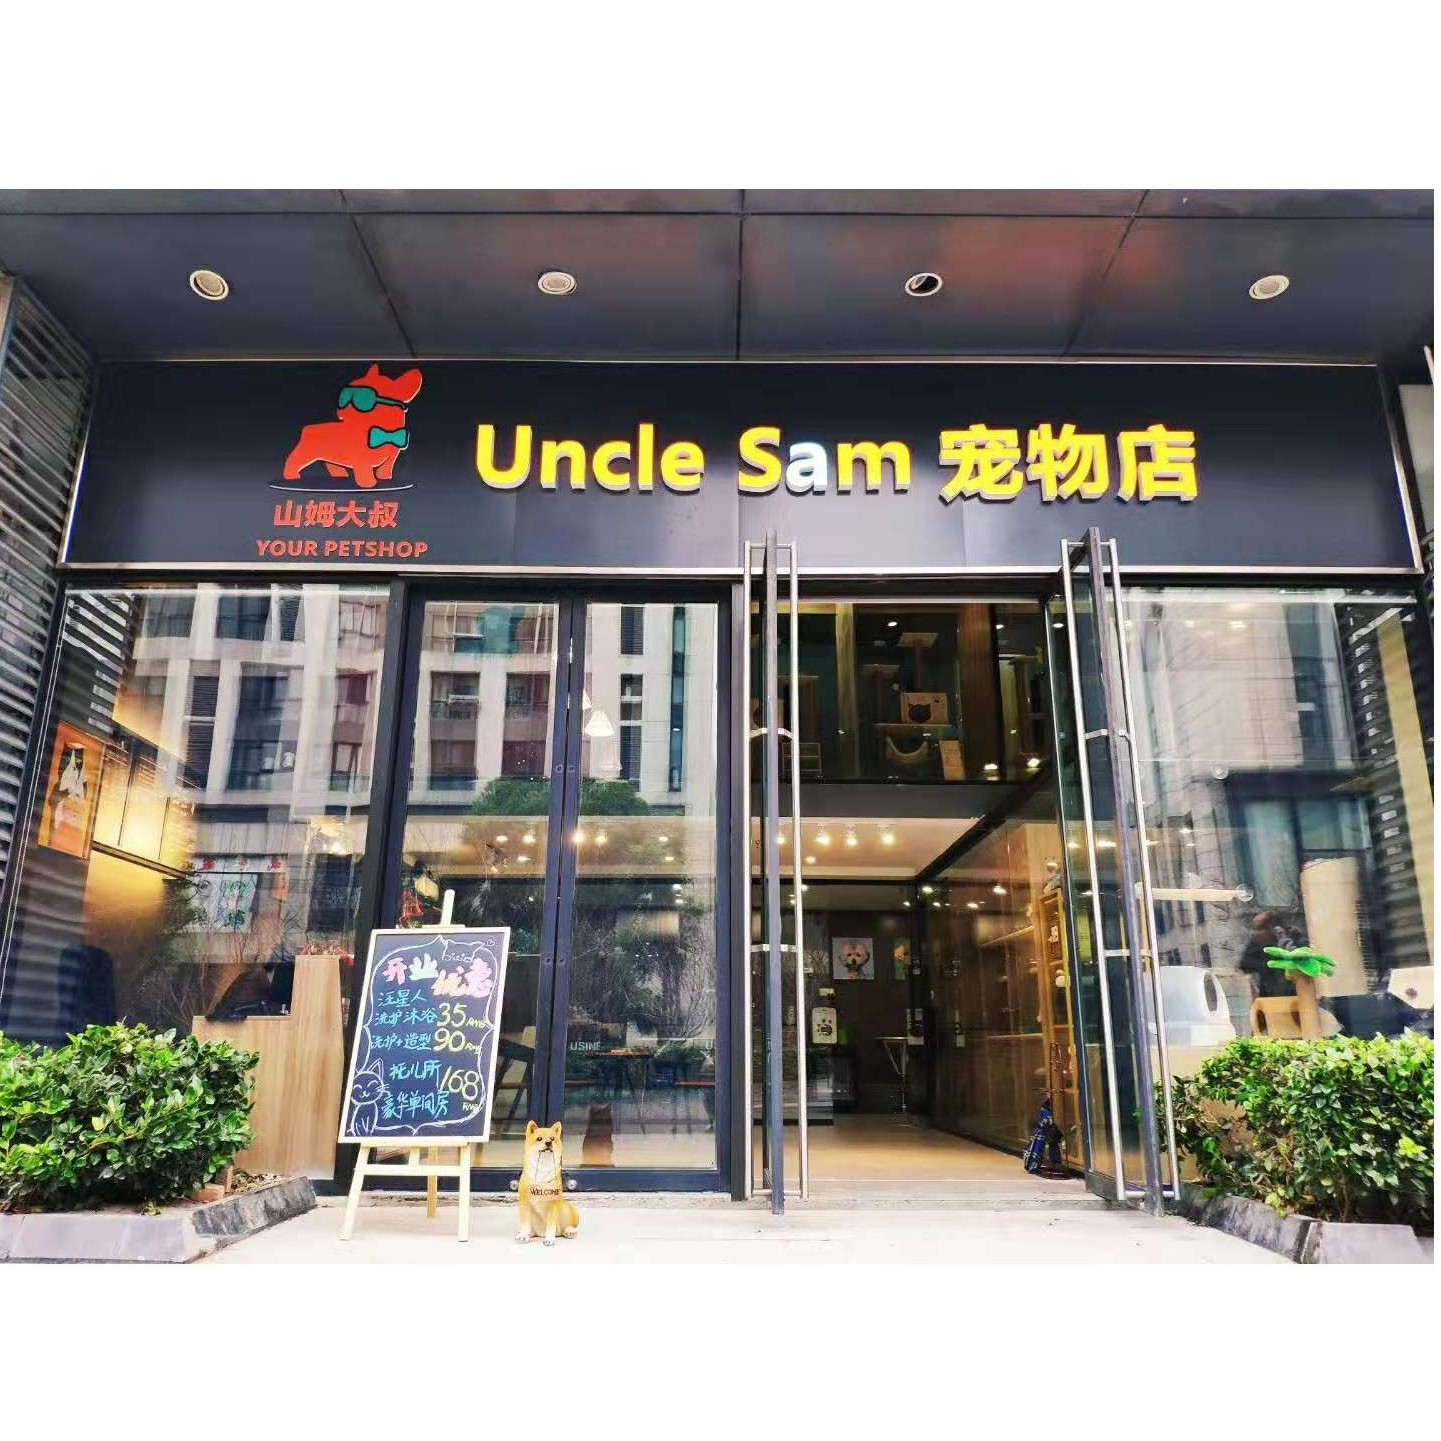 Uncle Sam 宠物店